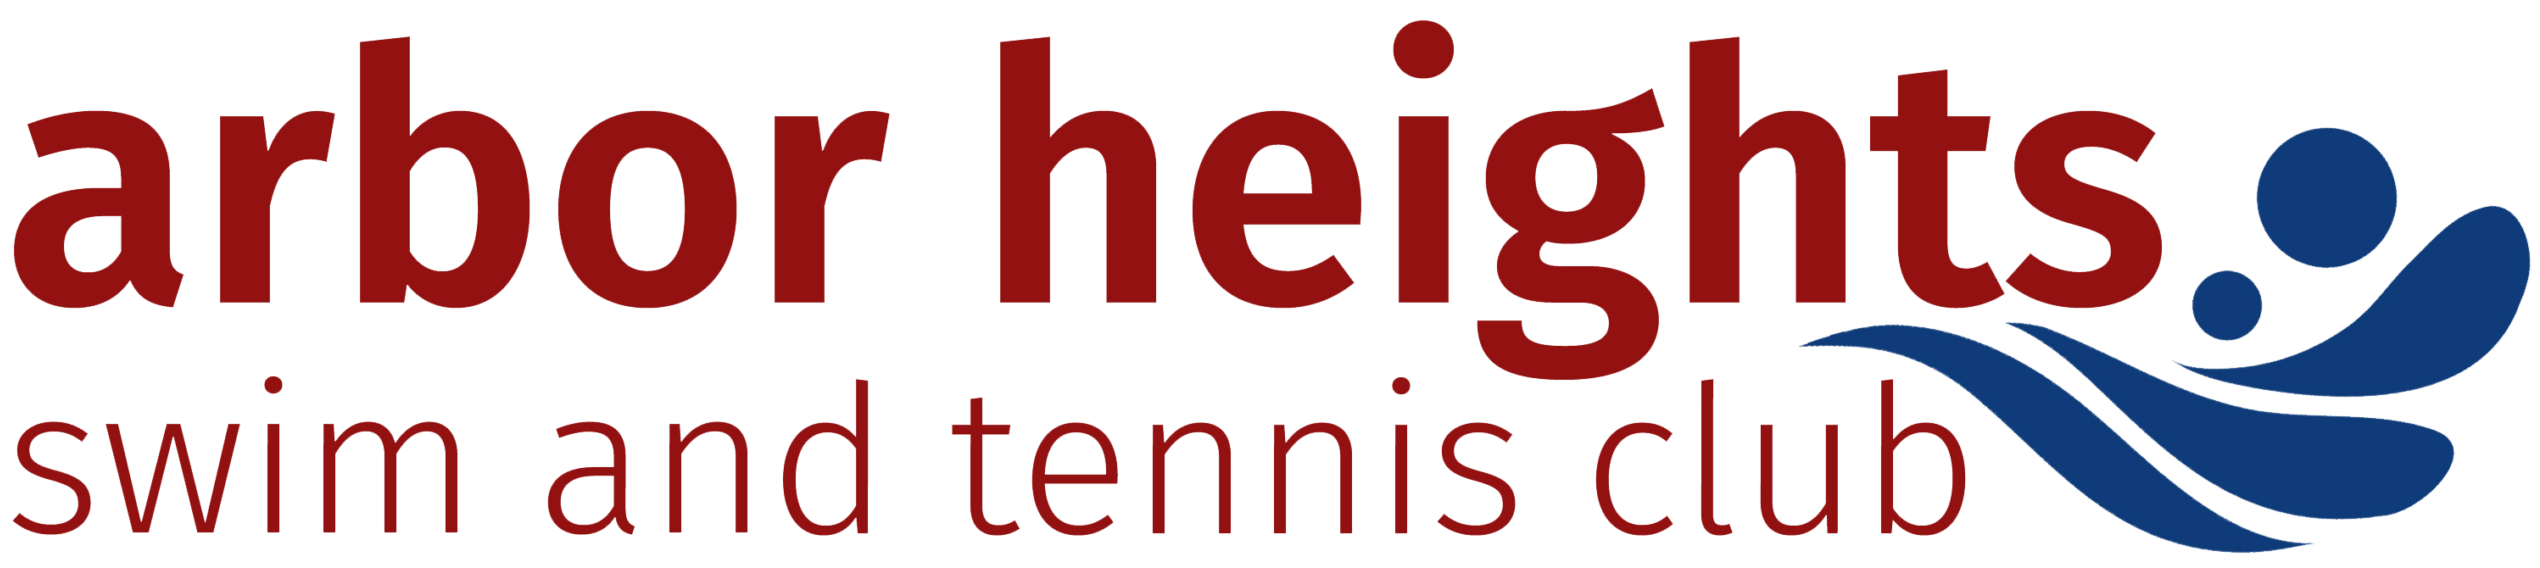 Arbor Heights Swim and Tennis Club